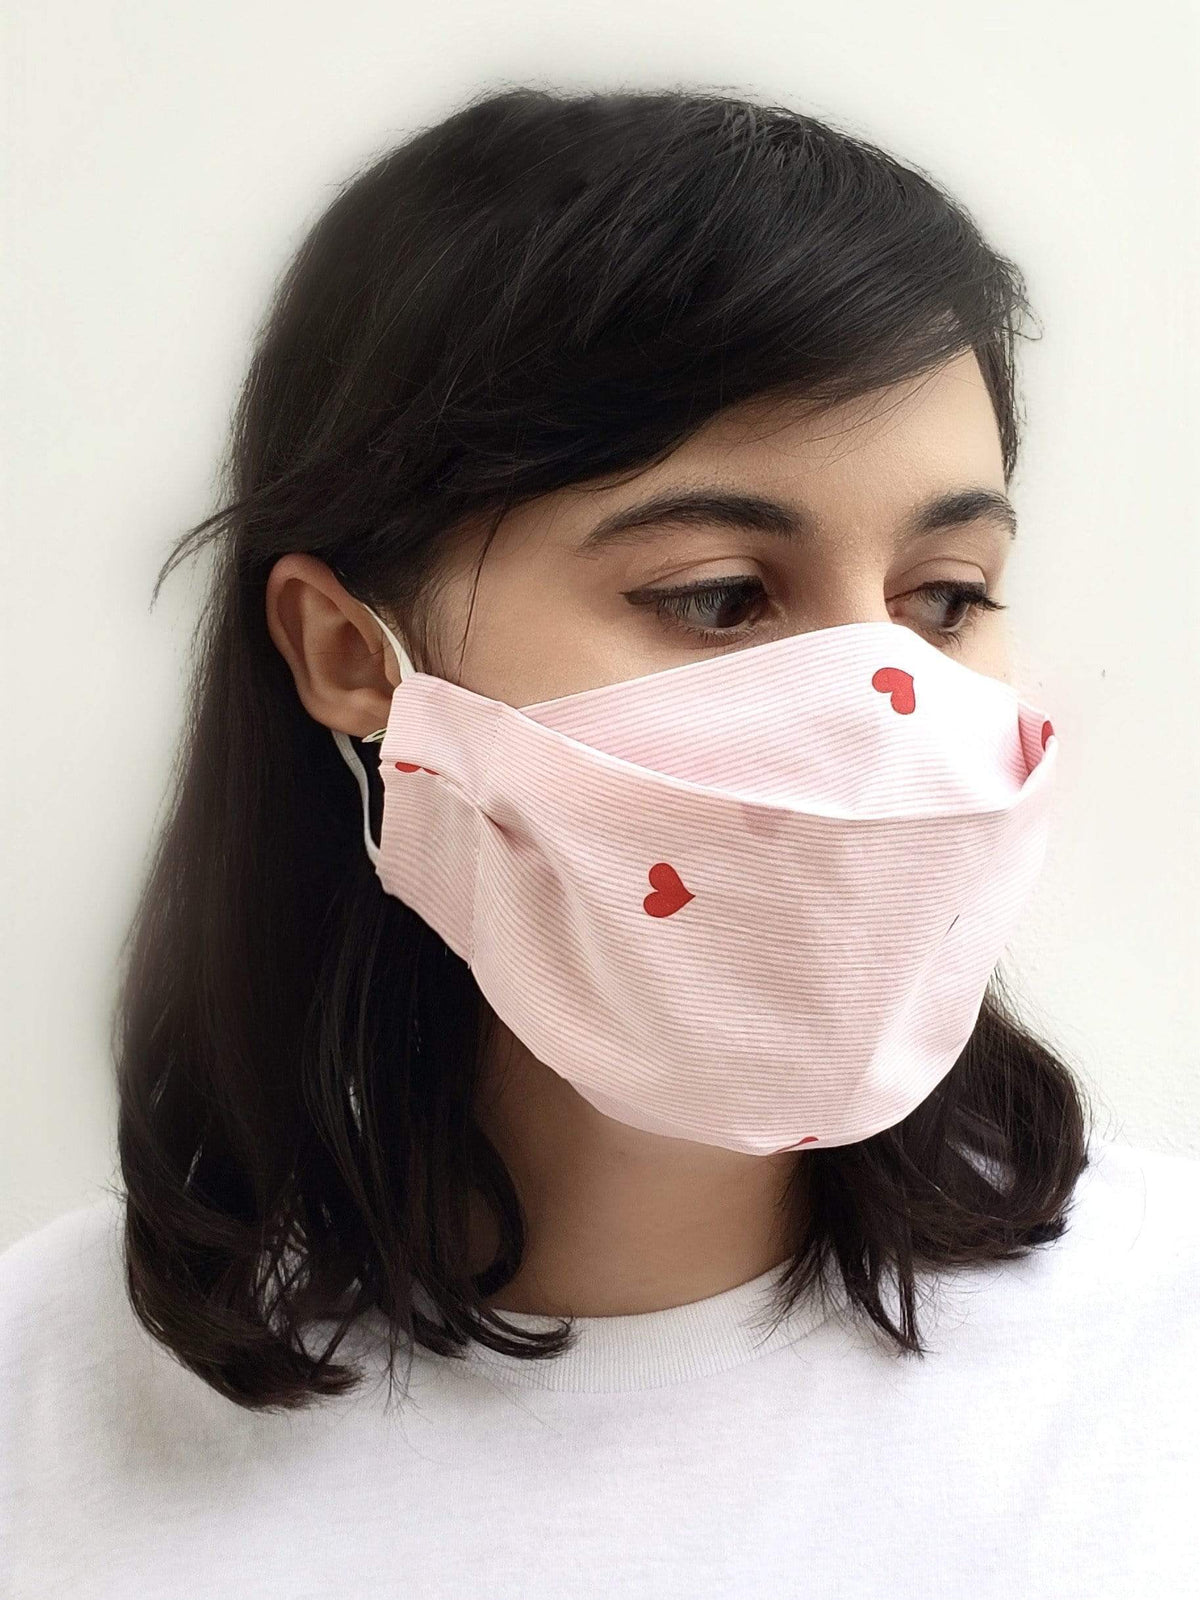 Box Pleated Face Masks New Navy Mask (Box Pleated w Filter Pocket) - Chloe Dao